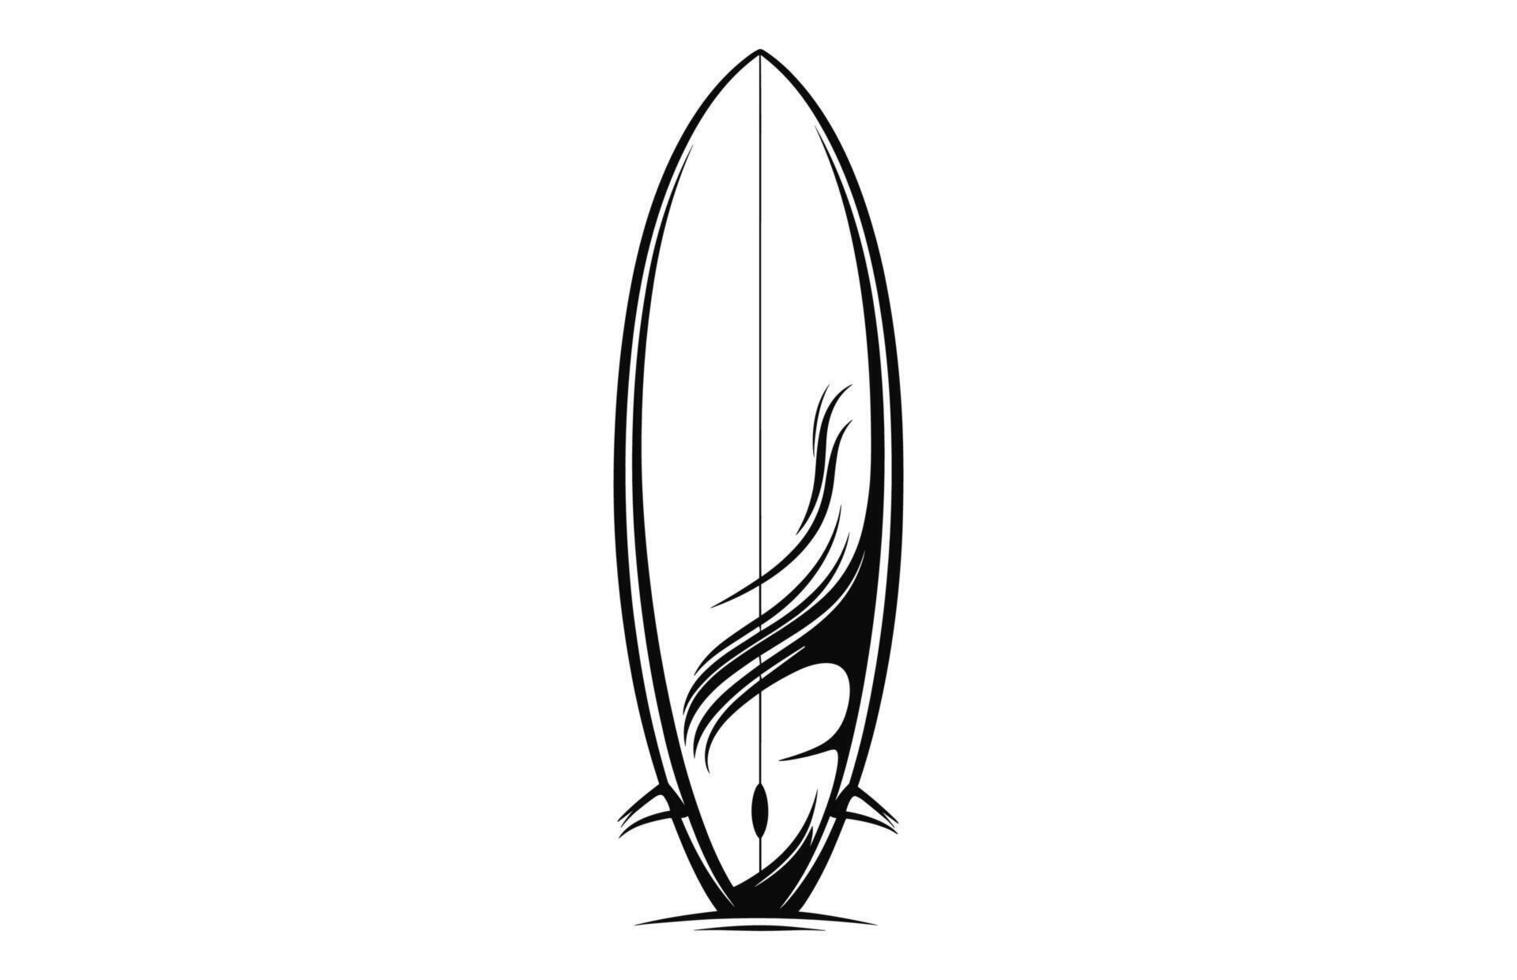 A Surfboard Vector sketch black Outline art free